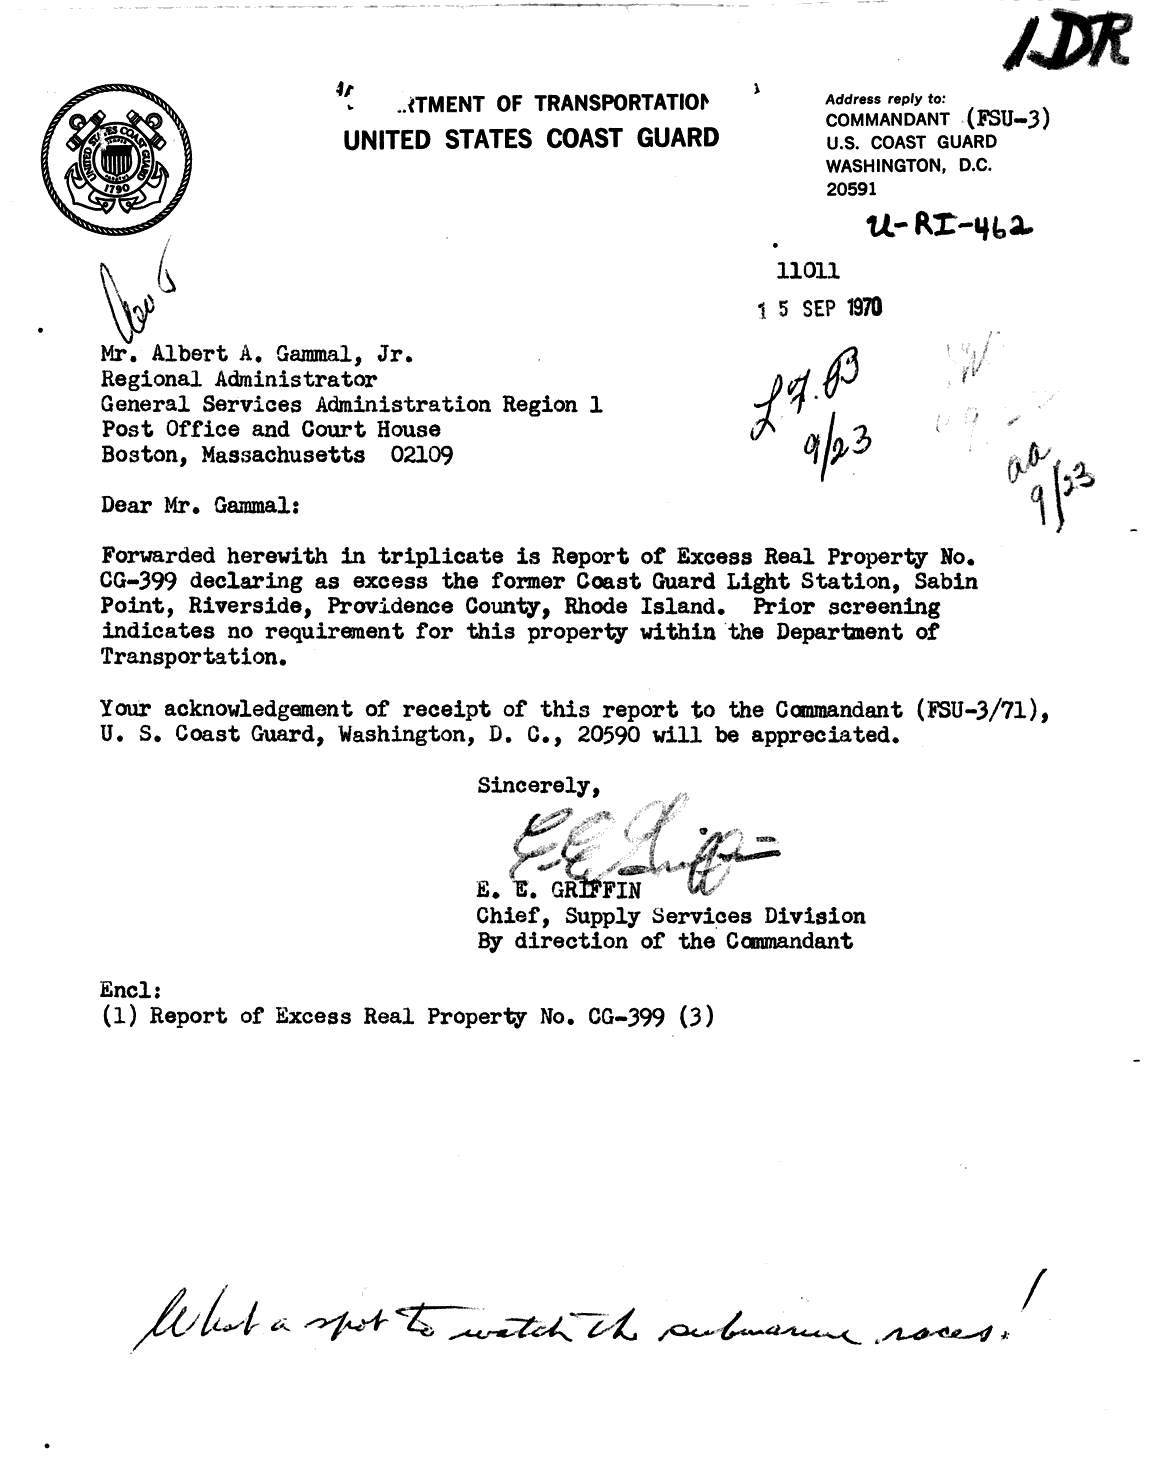 Sabin Point Light - Memorandum to Director, Office of Logistics and Procurement Management - 1970